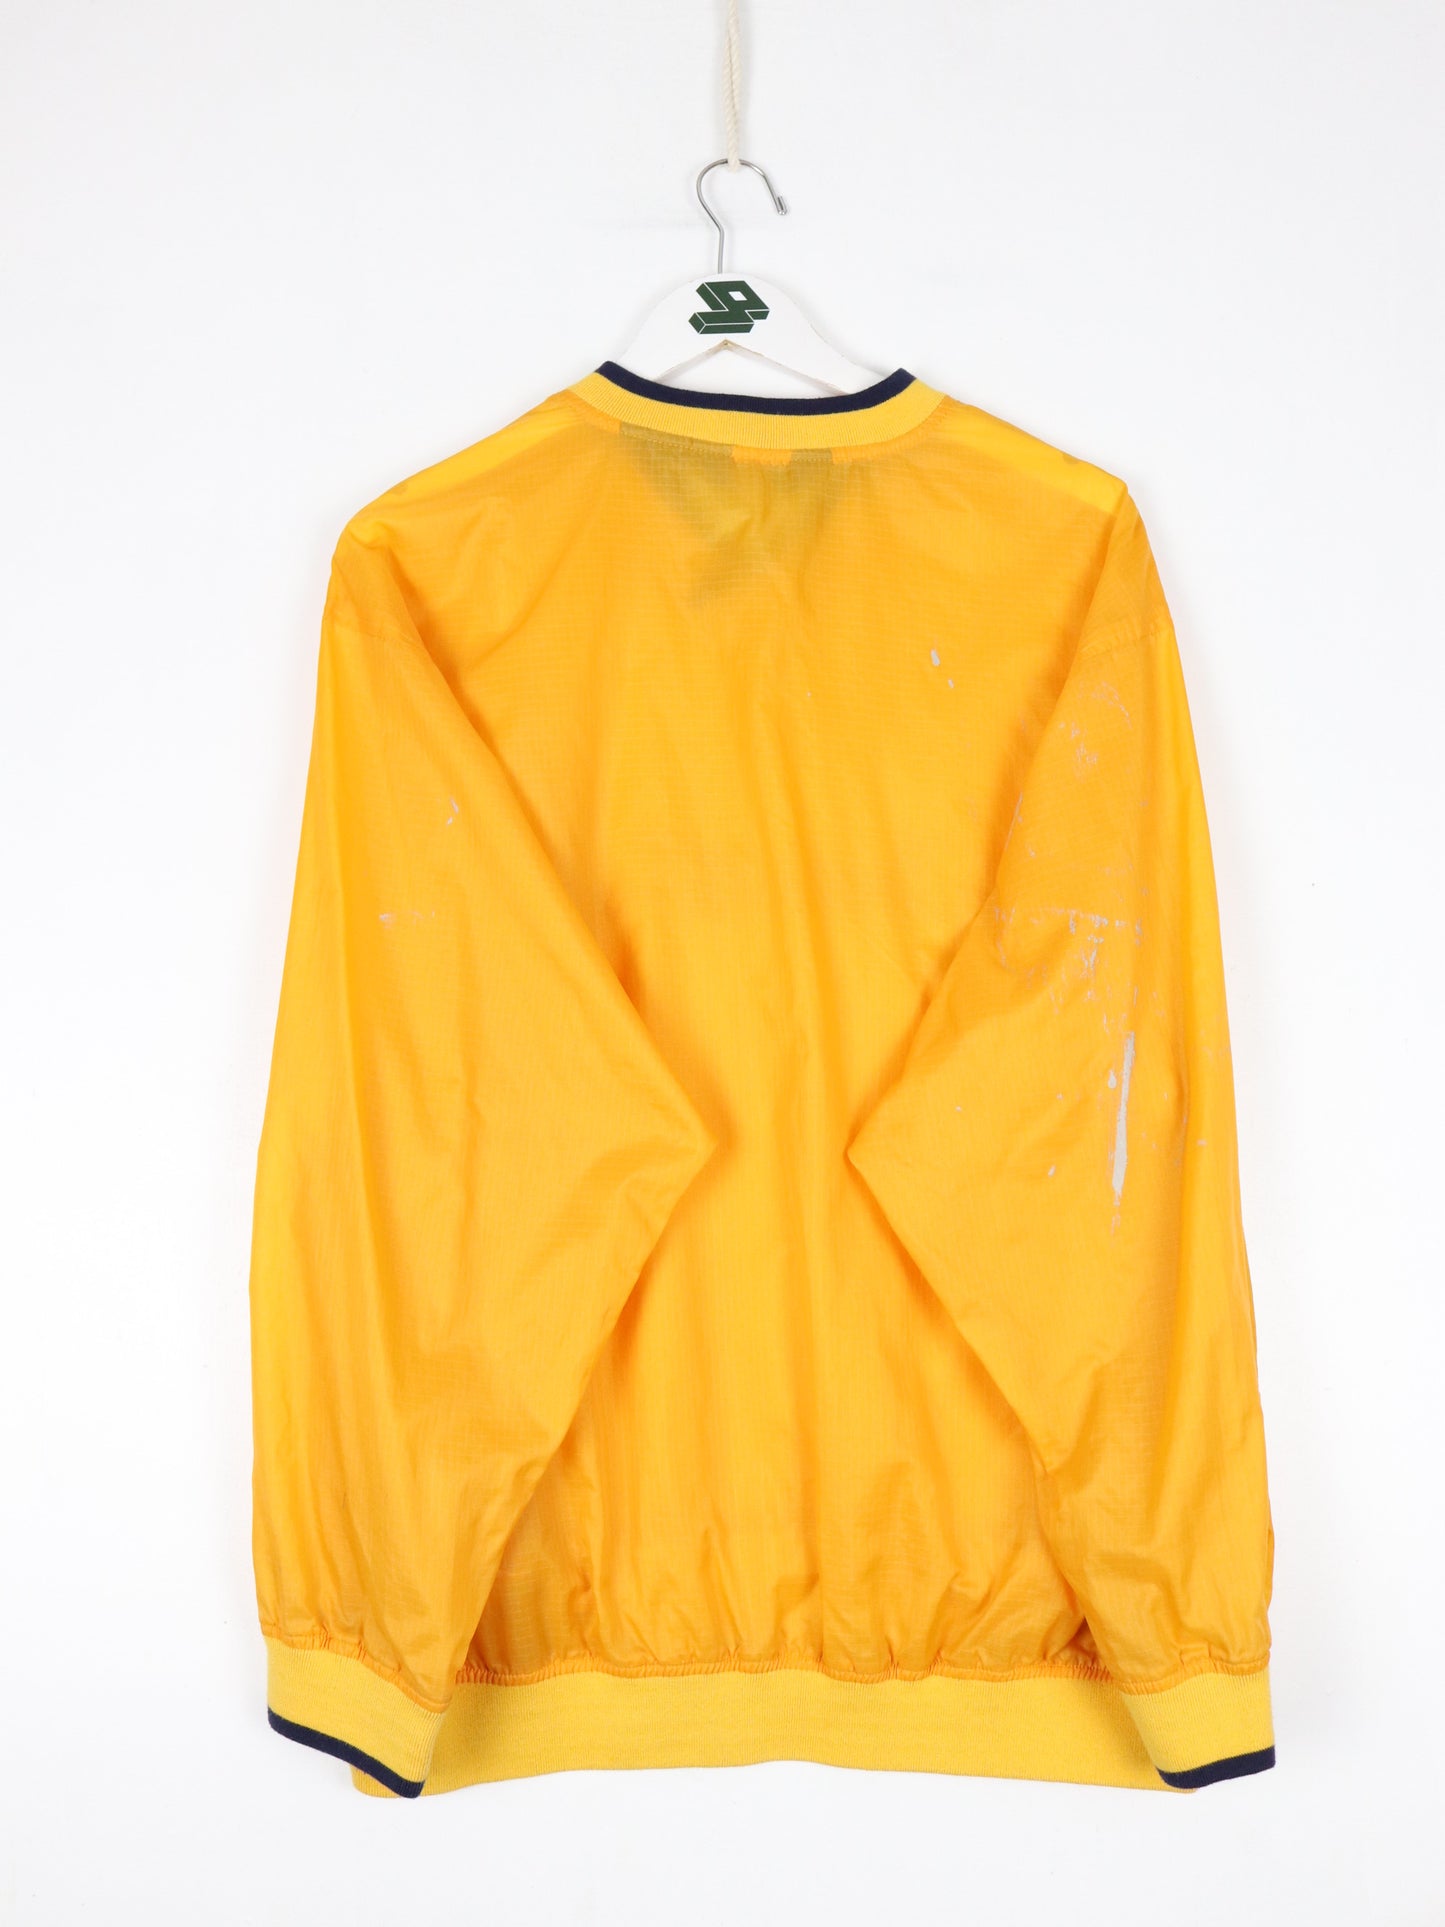 Vintage Eddie Bauer Jacket Mens Small Yellow Windbreaker Outdoors